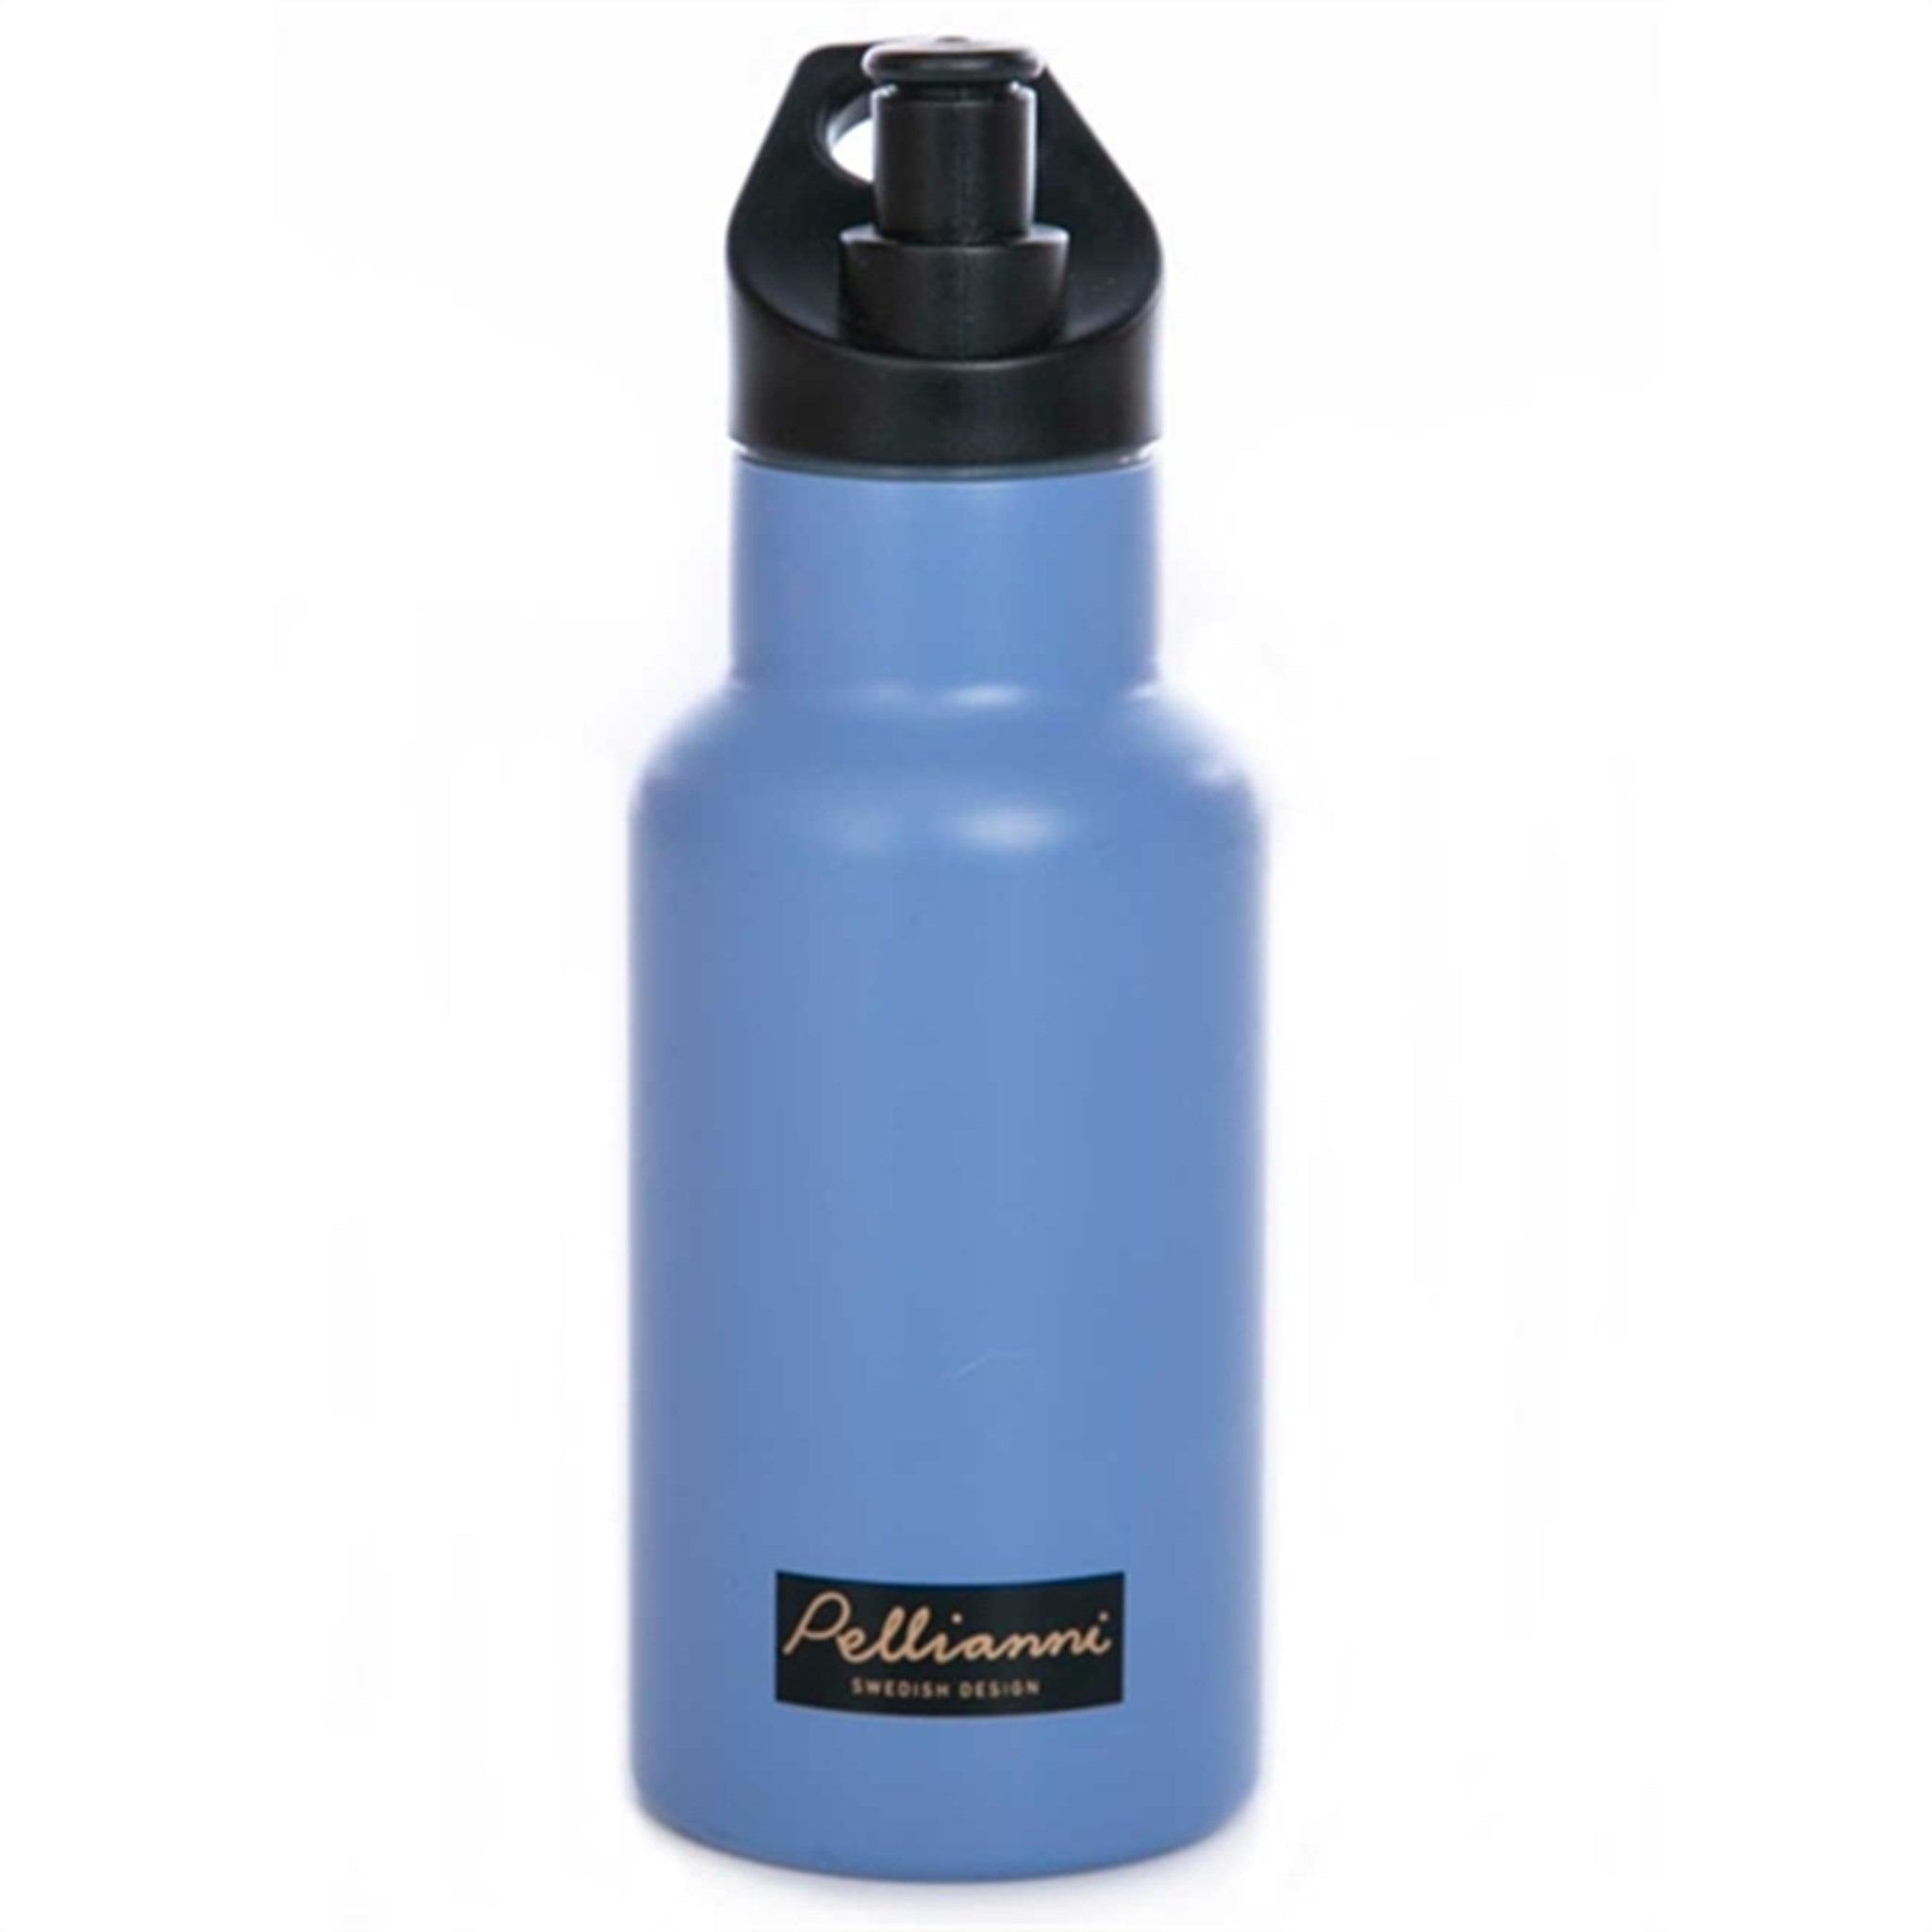 Pellianni Stainless Steel Bottle 350ml Blue